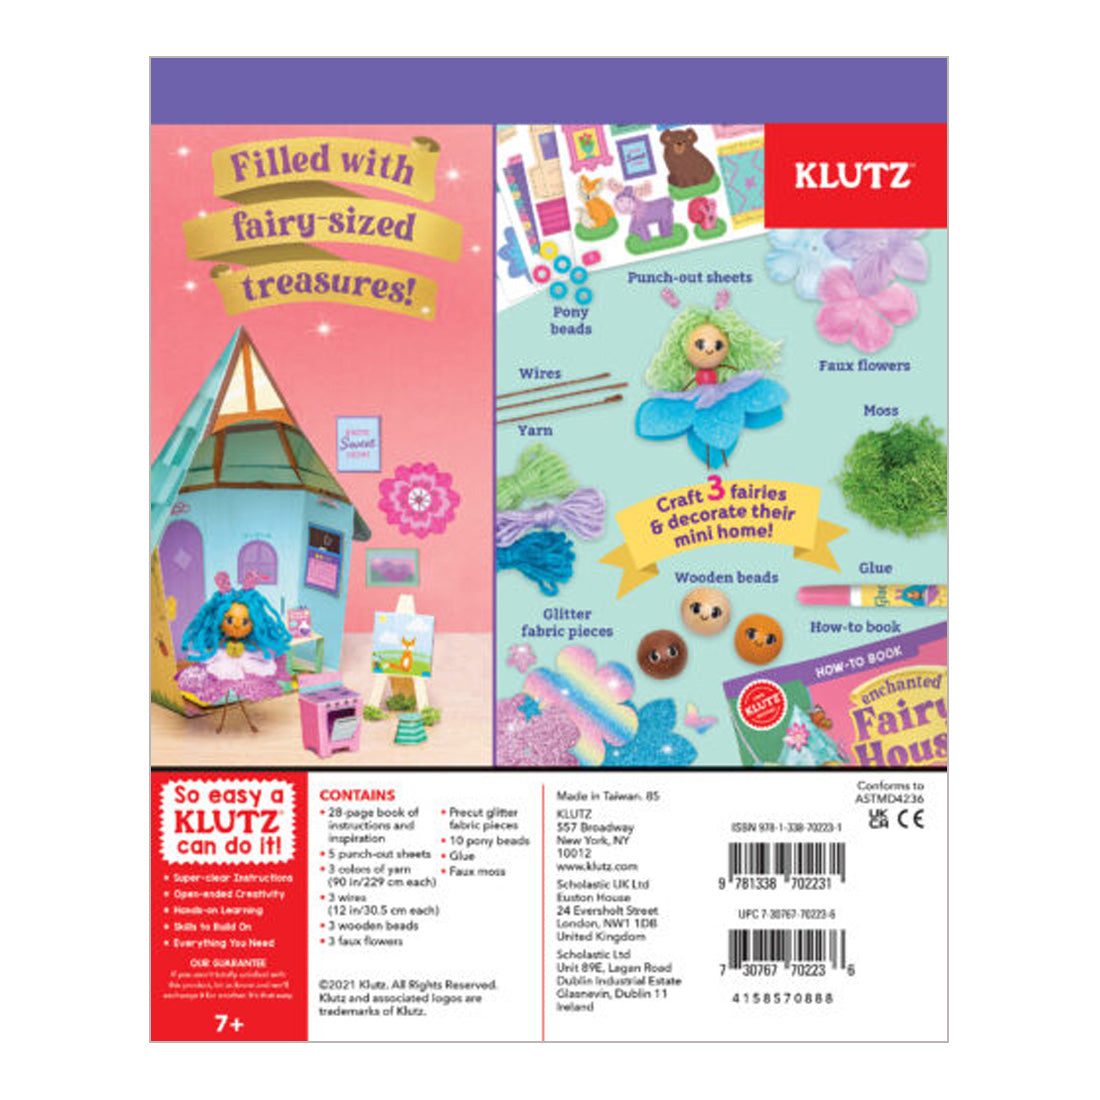 Klutz: Book & Activity Kit: Enchanted Fairy House